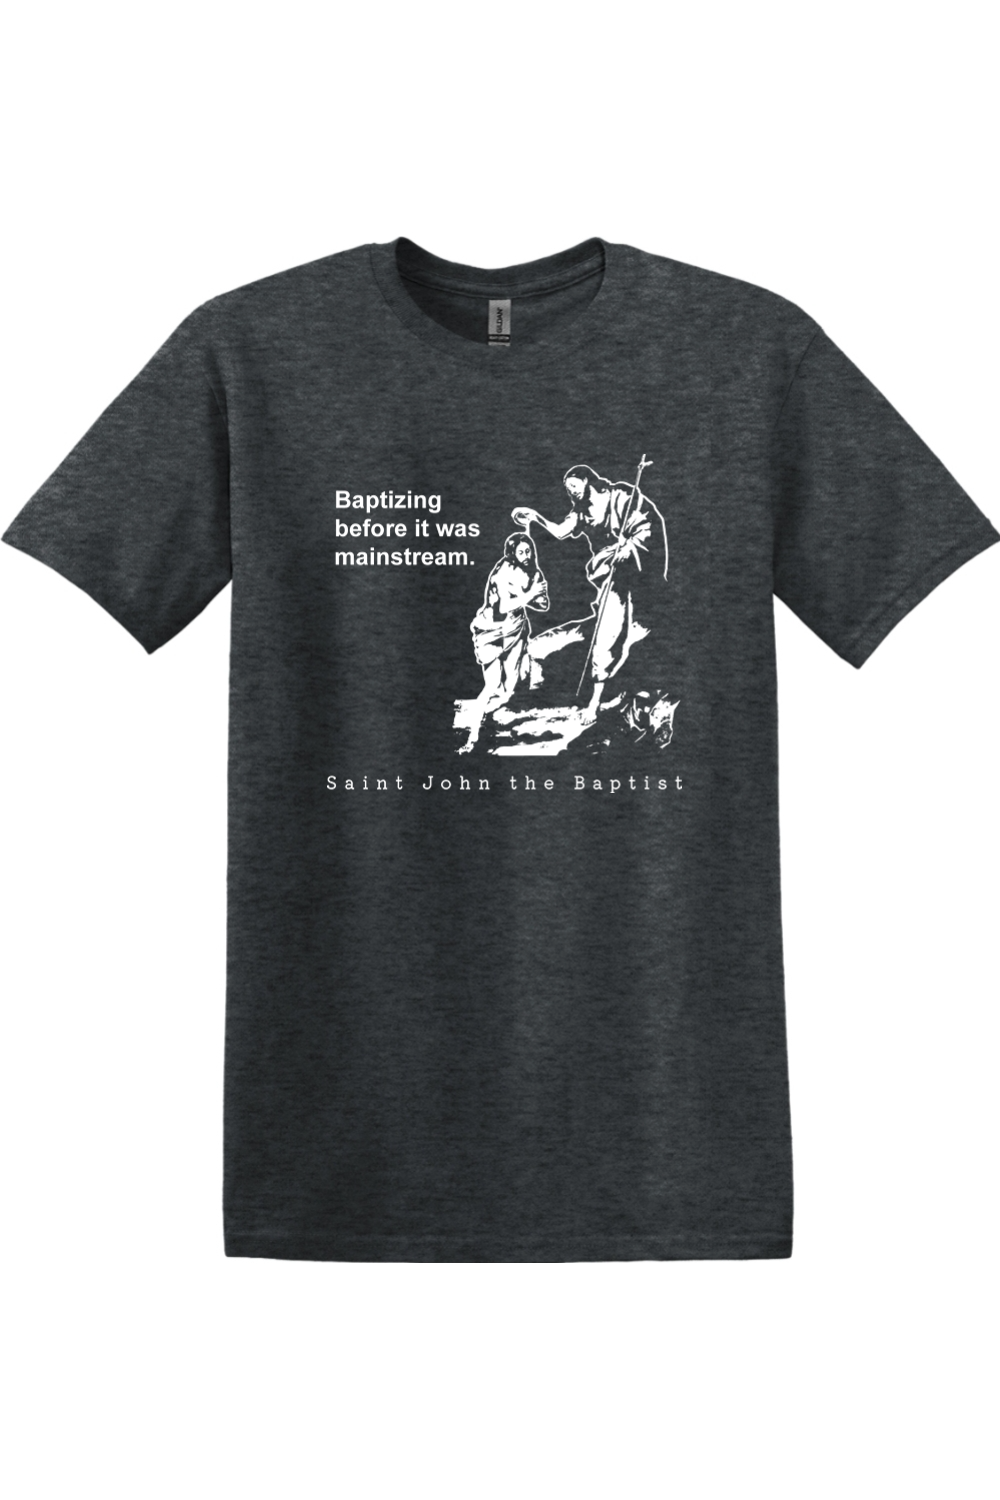 Mainstream - St John the Baptist Adult T-Shirt